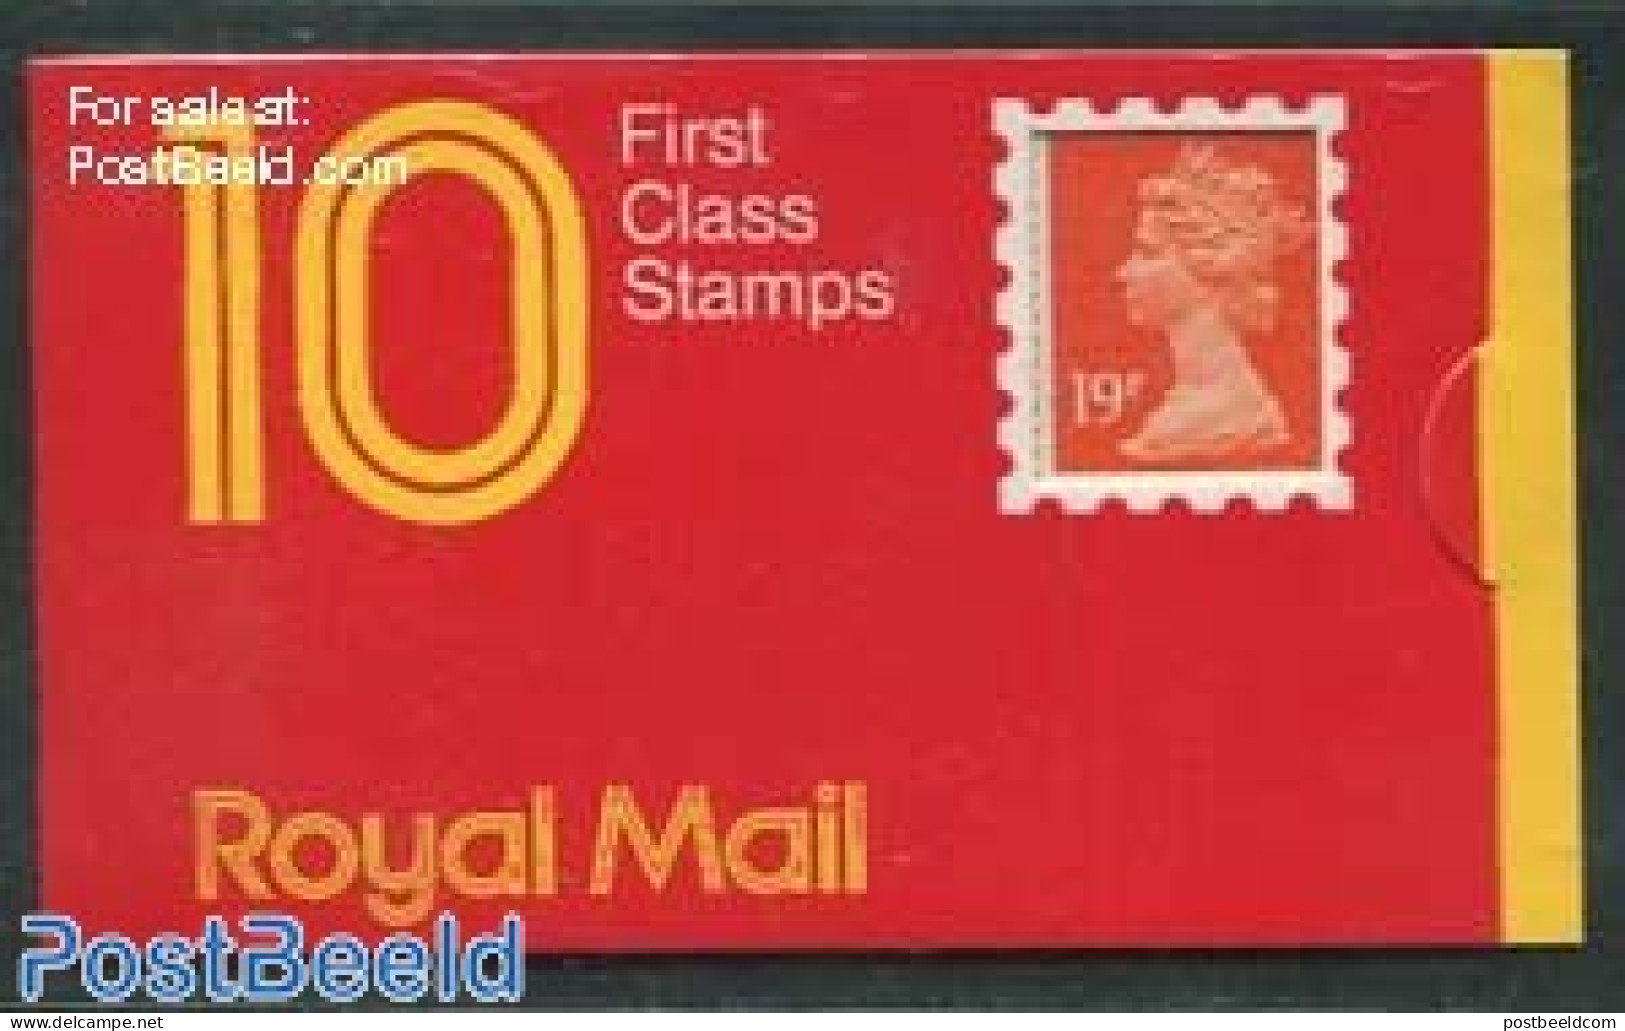 Great Britain 1988 Definitives Booklet, 10x19p, Harrison, Mint NH, Stamp Booklets - Ungebraucht